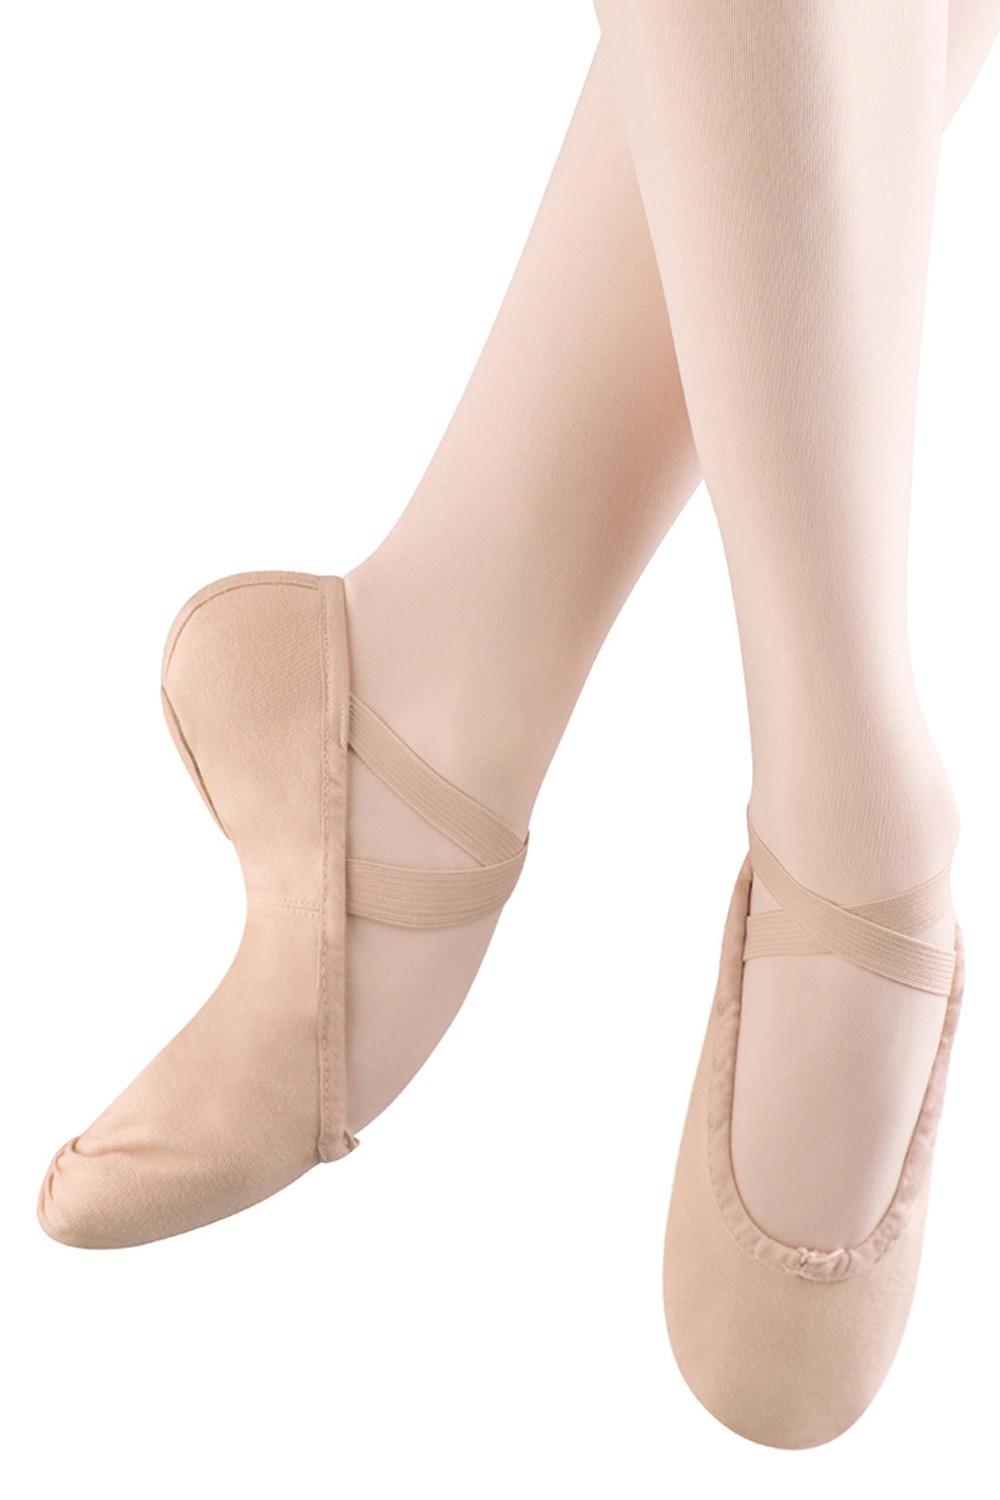 Bloch S0277l Womens Ballet Shoes Bloch® Us Store 